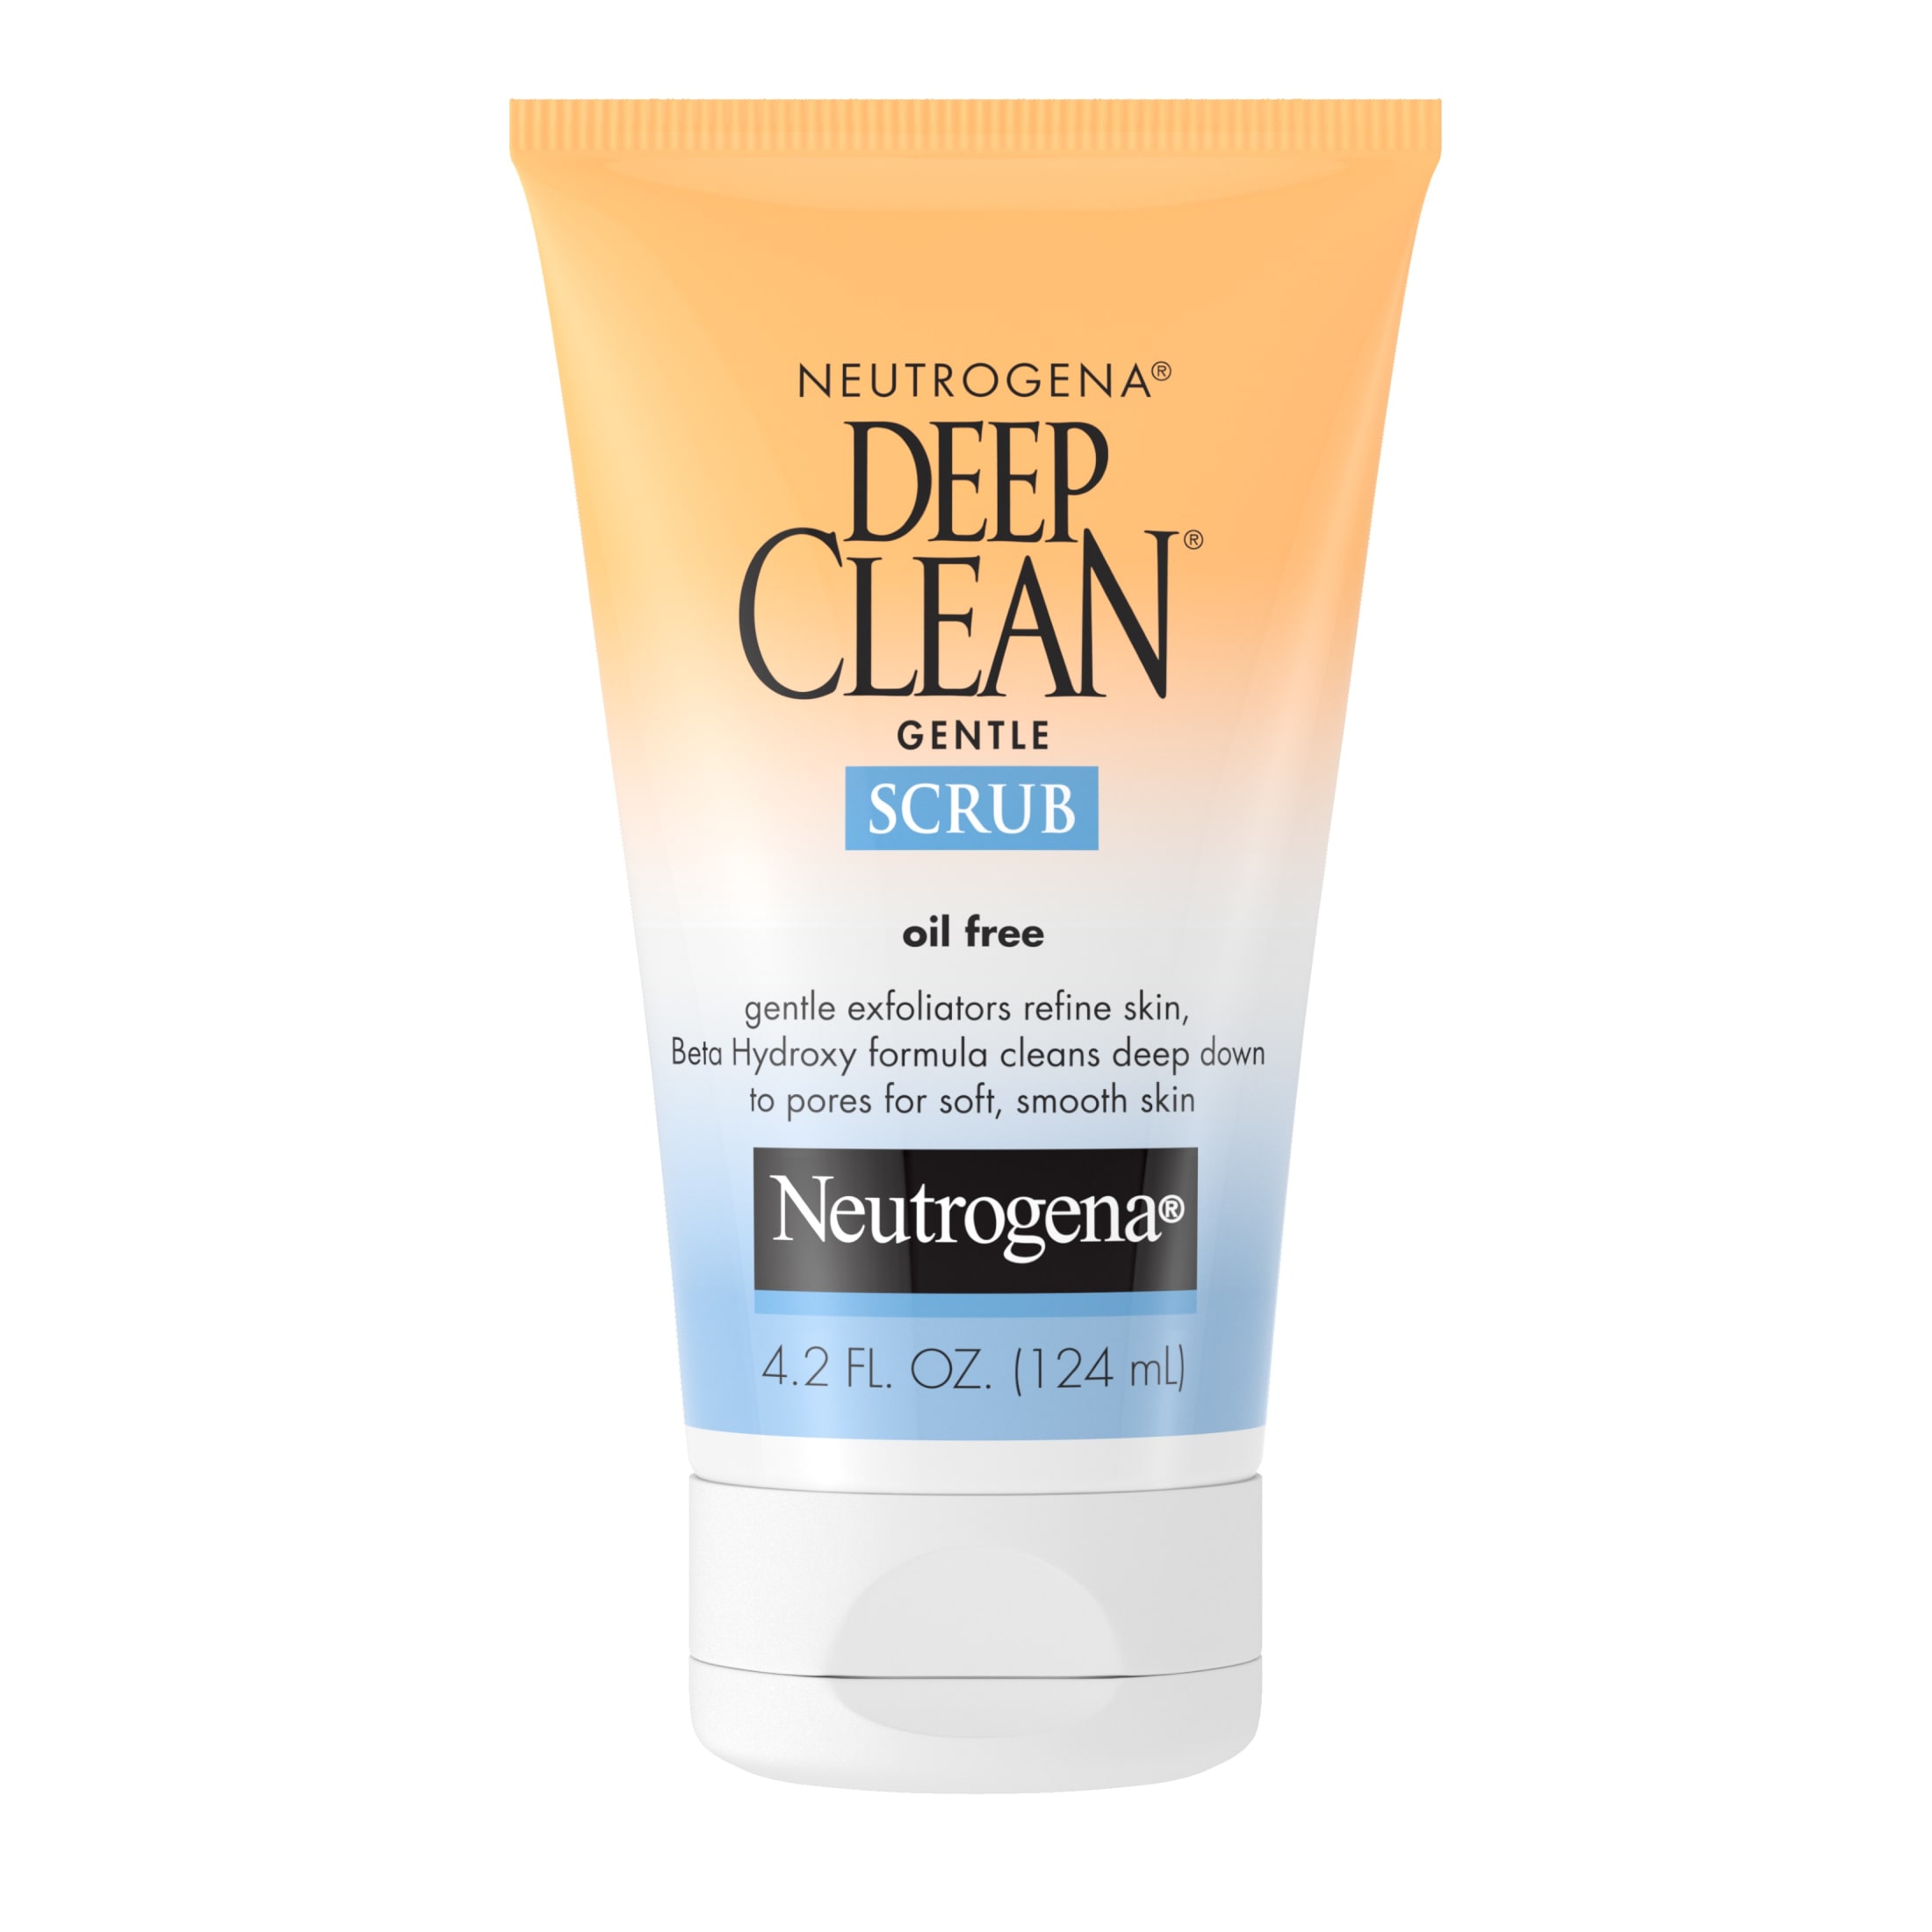 Neutrogena Deep Clean Gentle Facial Scrub, Oil free Cleanser 4.2 fl. oz - image 1 of 12